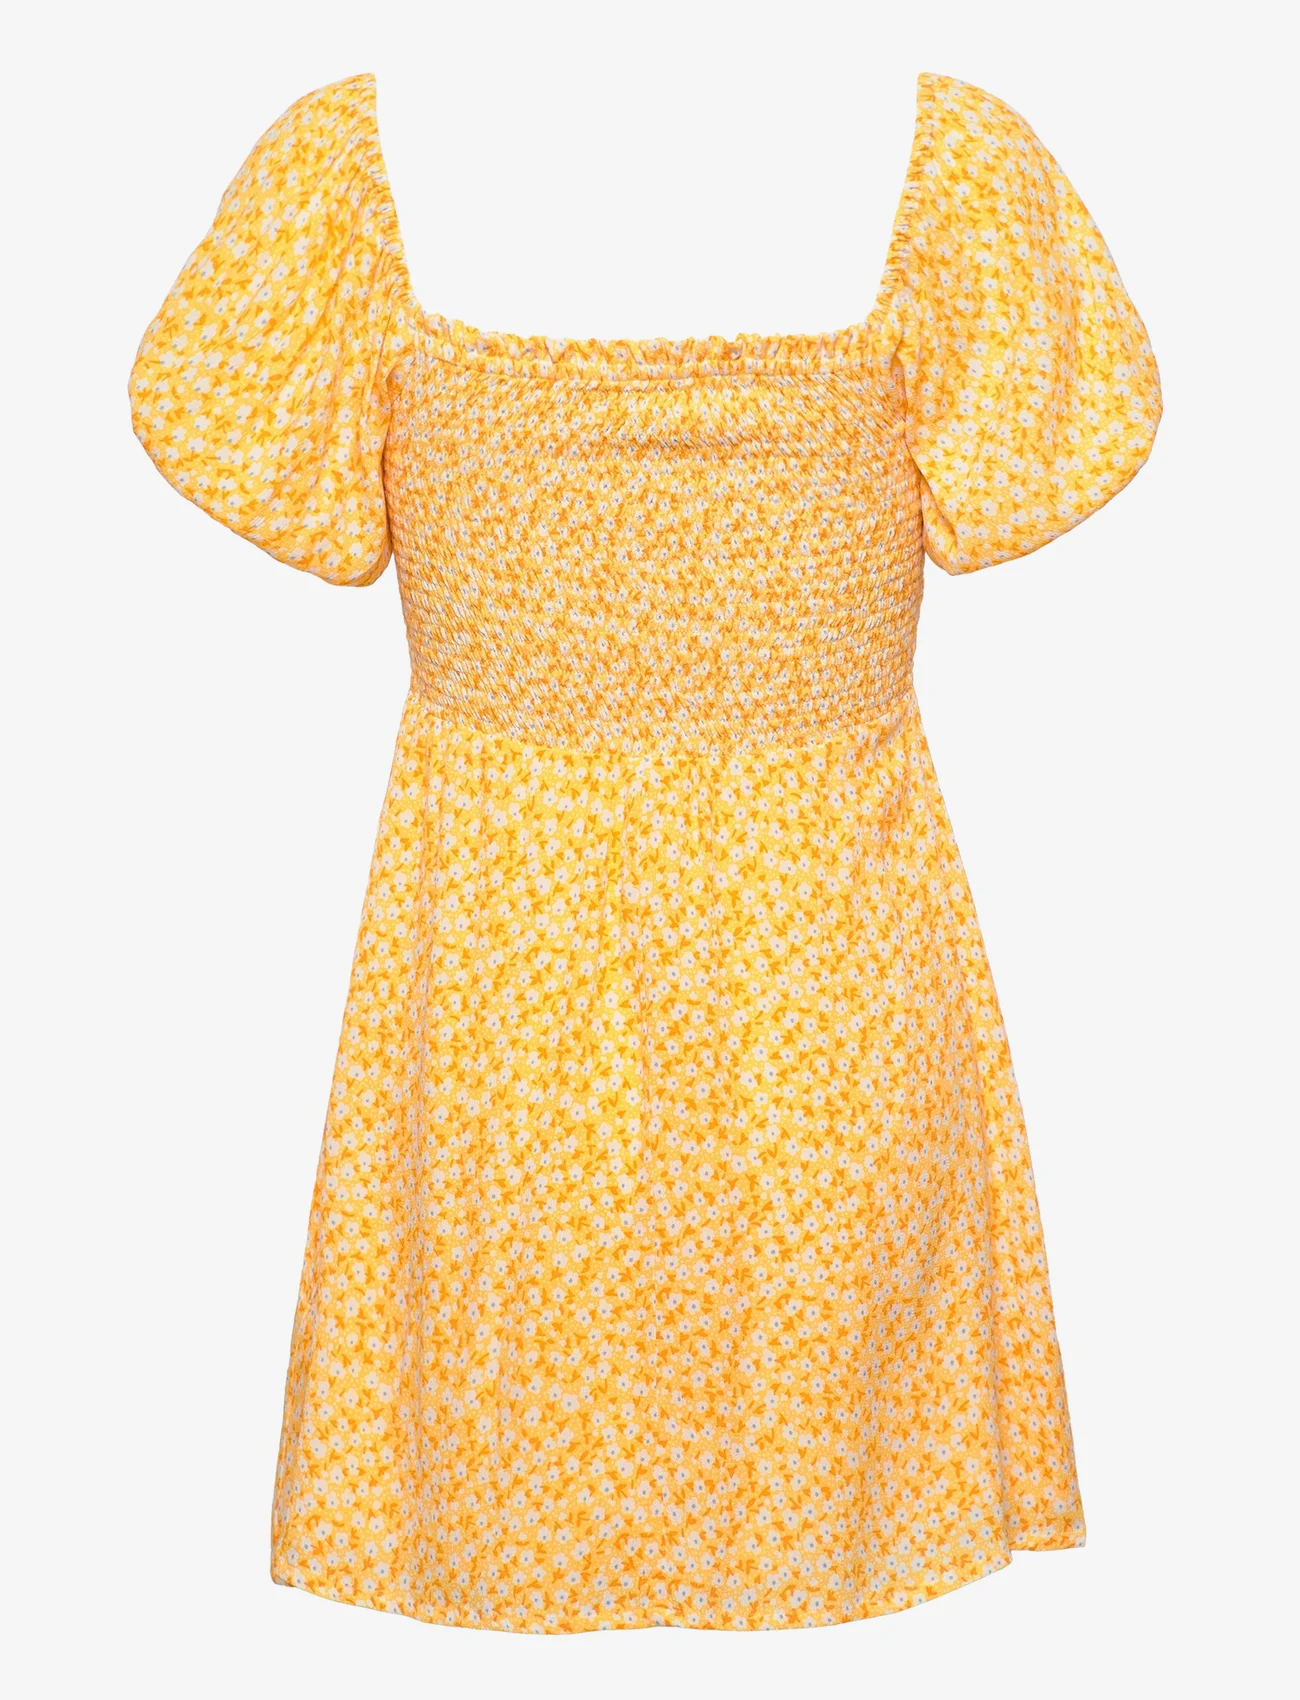 Faithfull The Brand - DOMENICA MINI DRESS - festkläder till outletpriser - careyes floral - marigold - 1